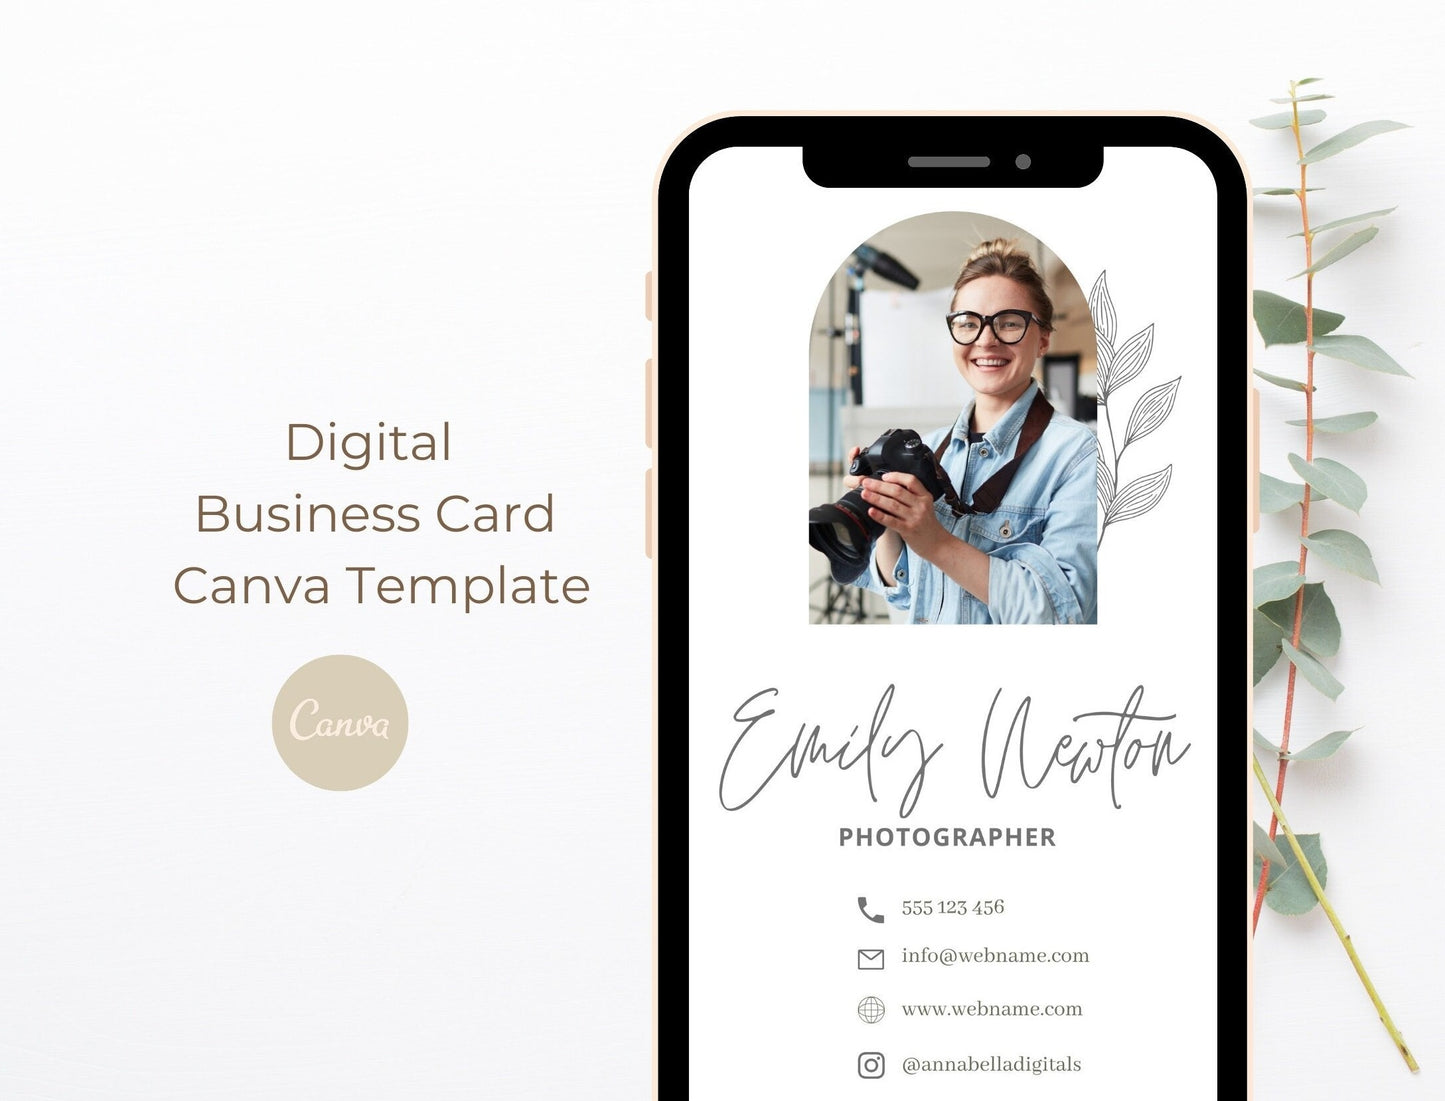 Digital Business Card Canva Template